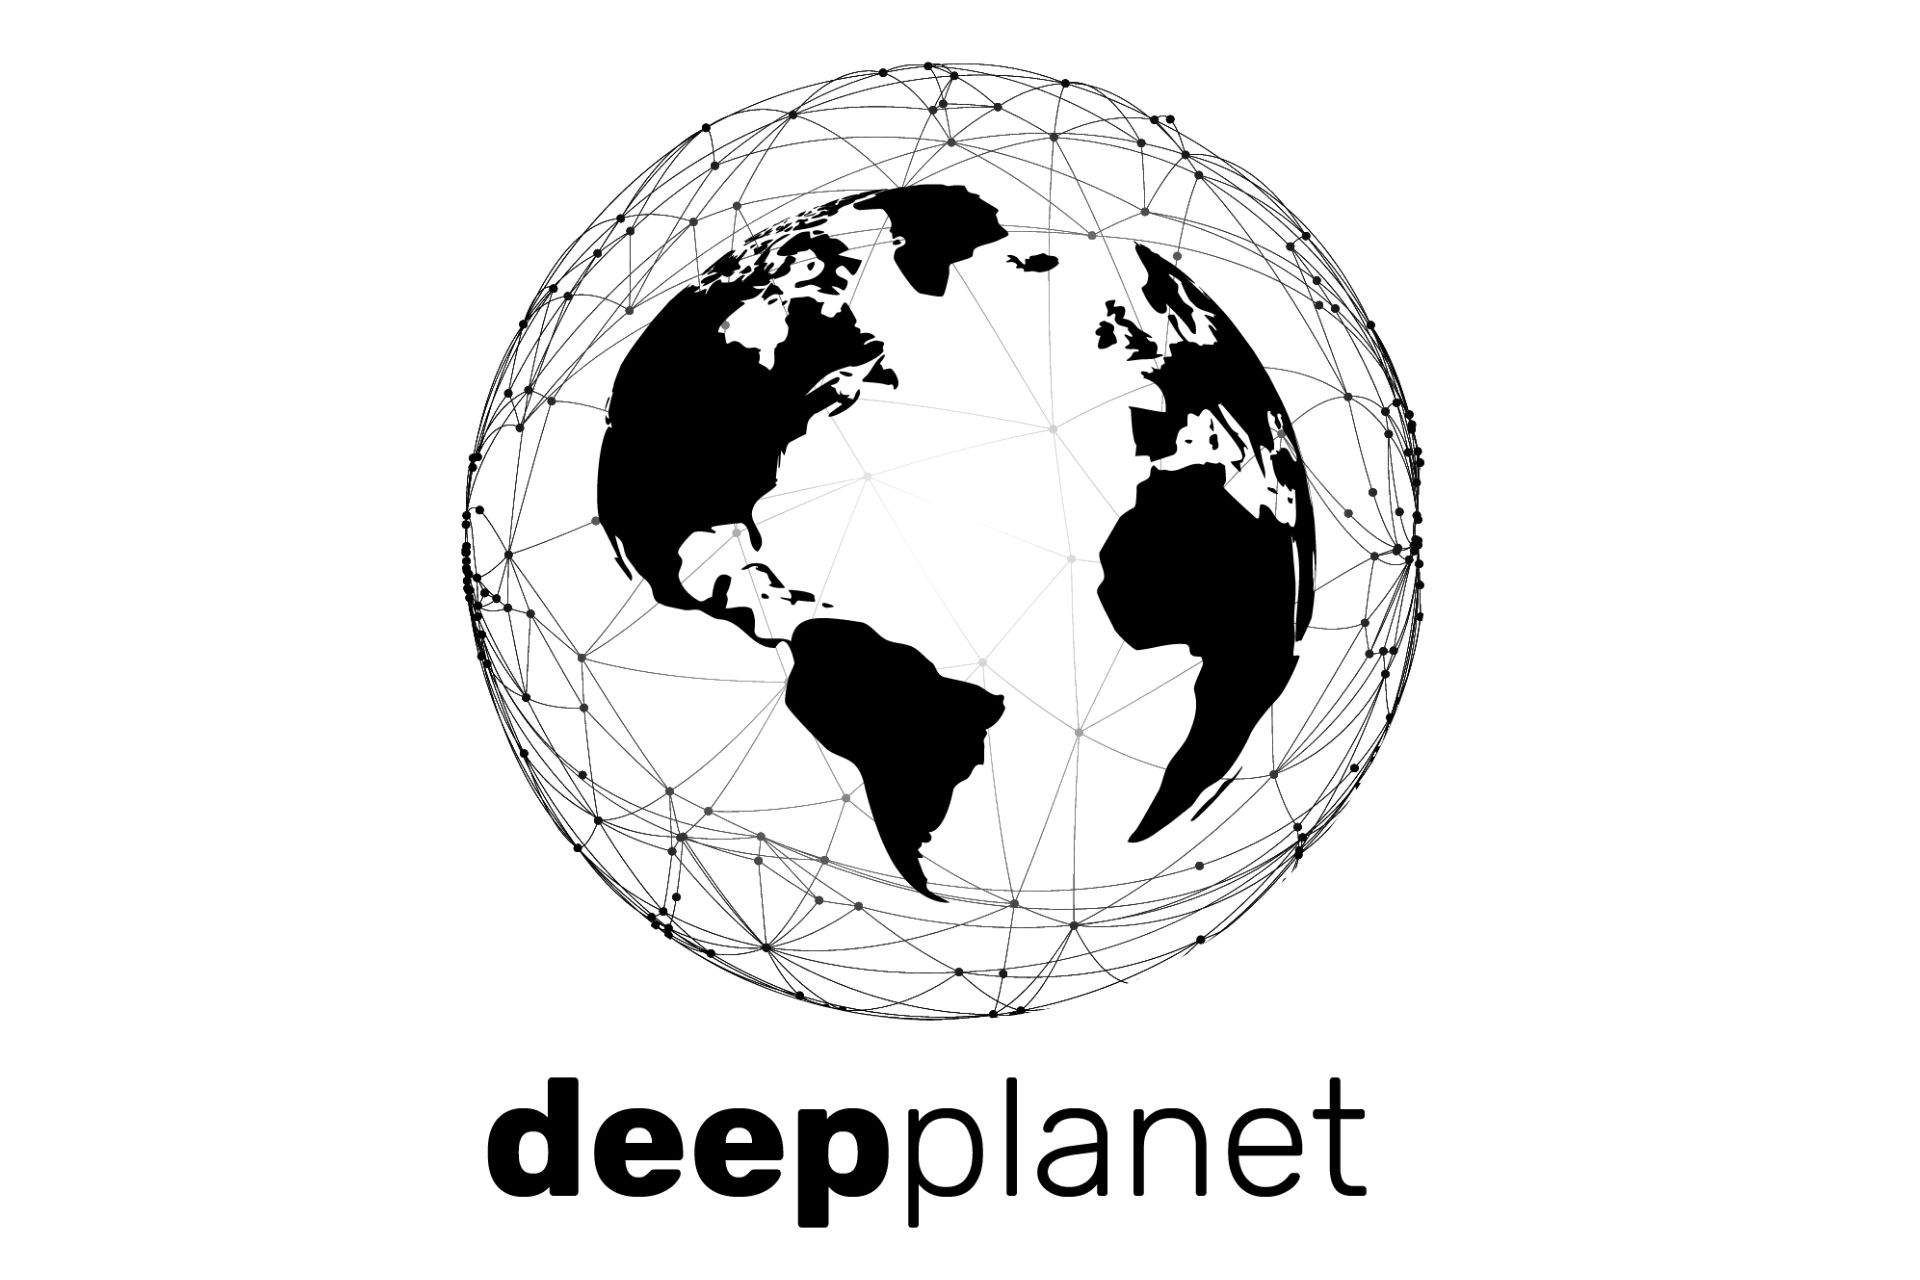 Deep planet logo